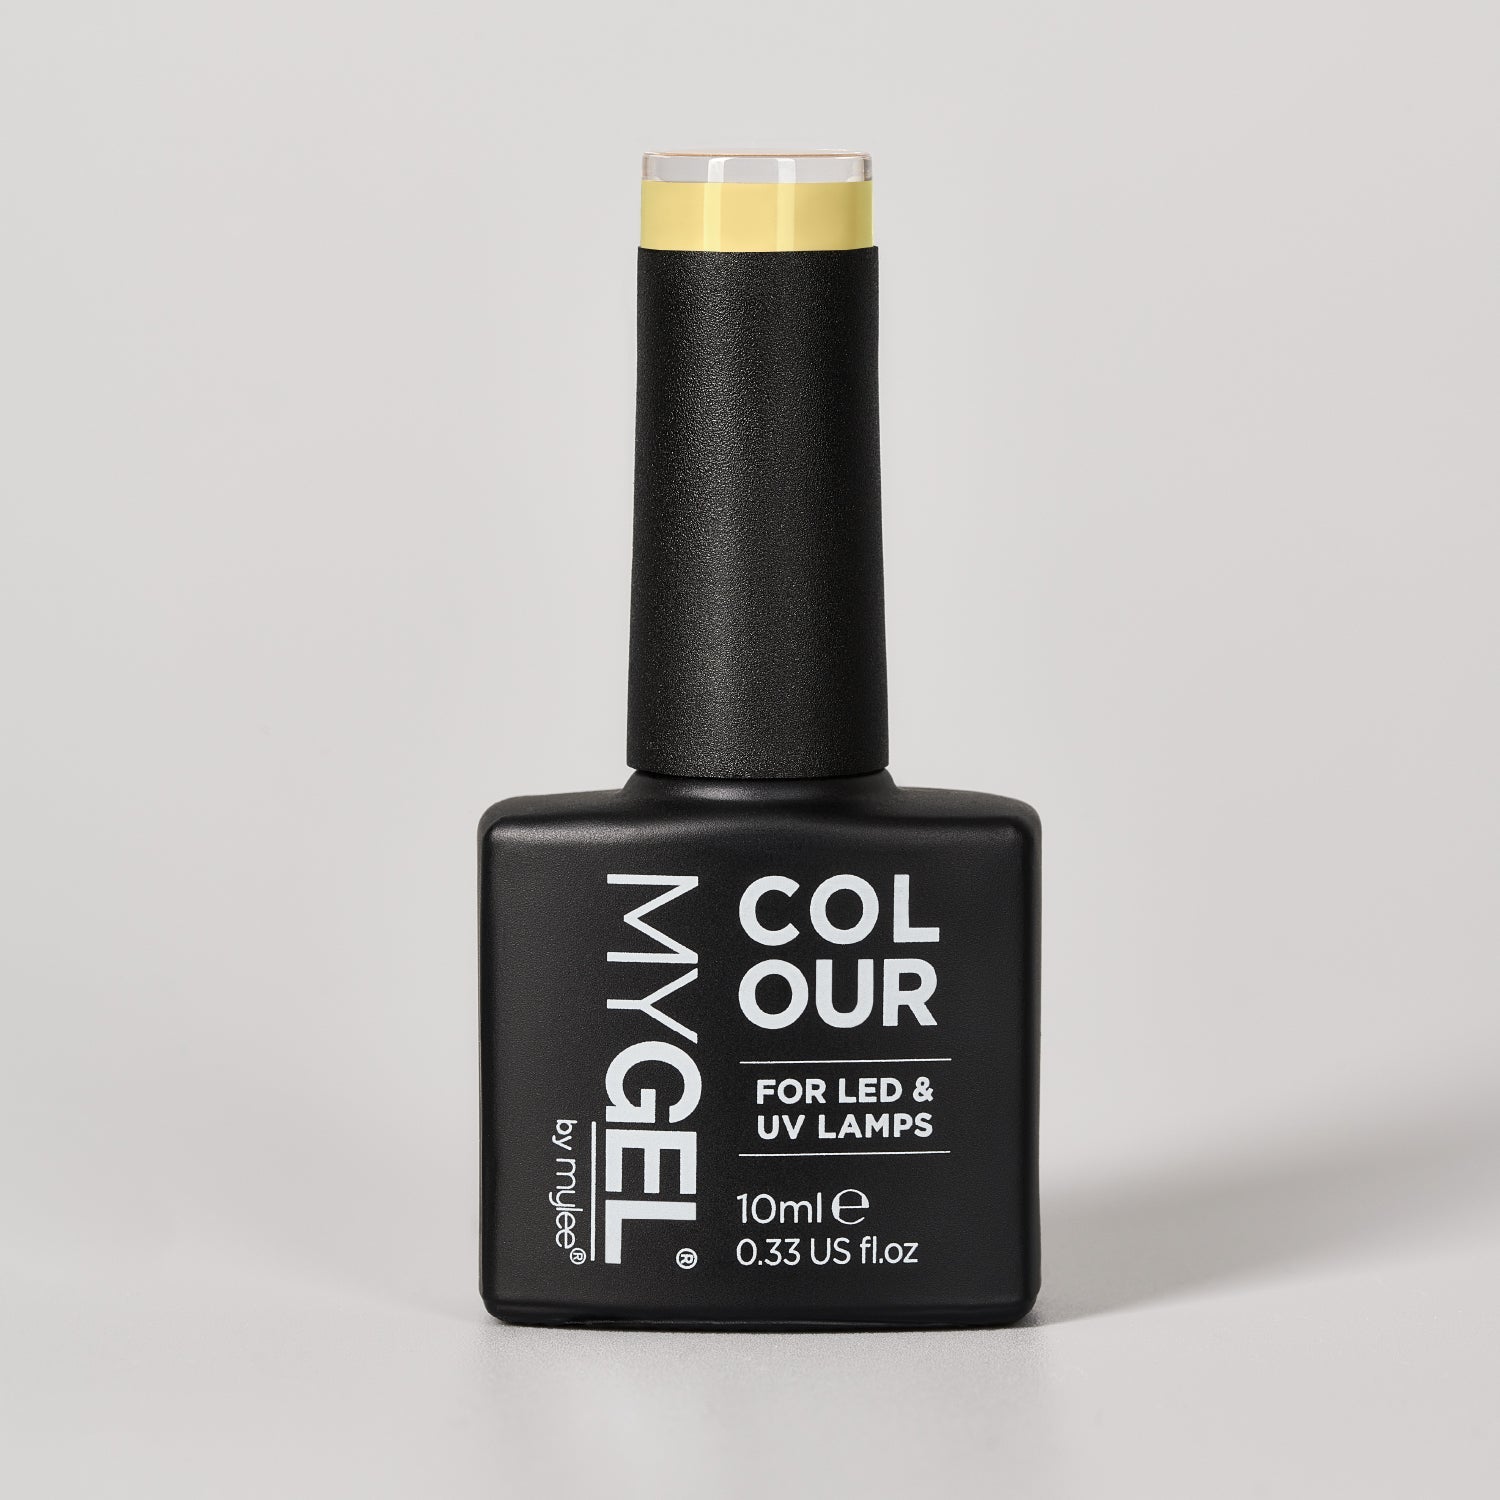 Mylee Twist And Shine LED/UV Yellow Gel Nail Polish 10ml – Long Lasting At Home Manicure/Pedicure, High Gloss And Chip Free Wear Nail Varnish